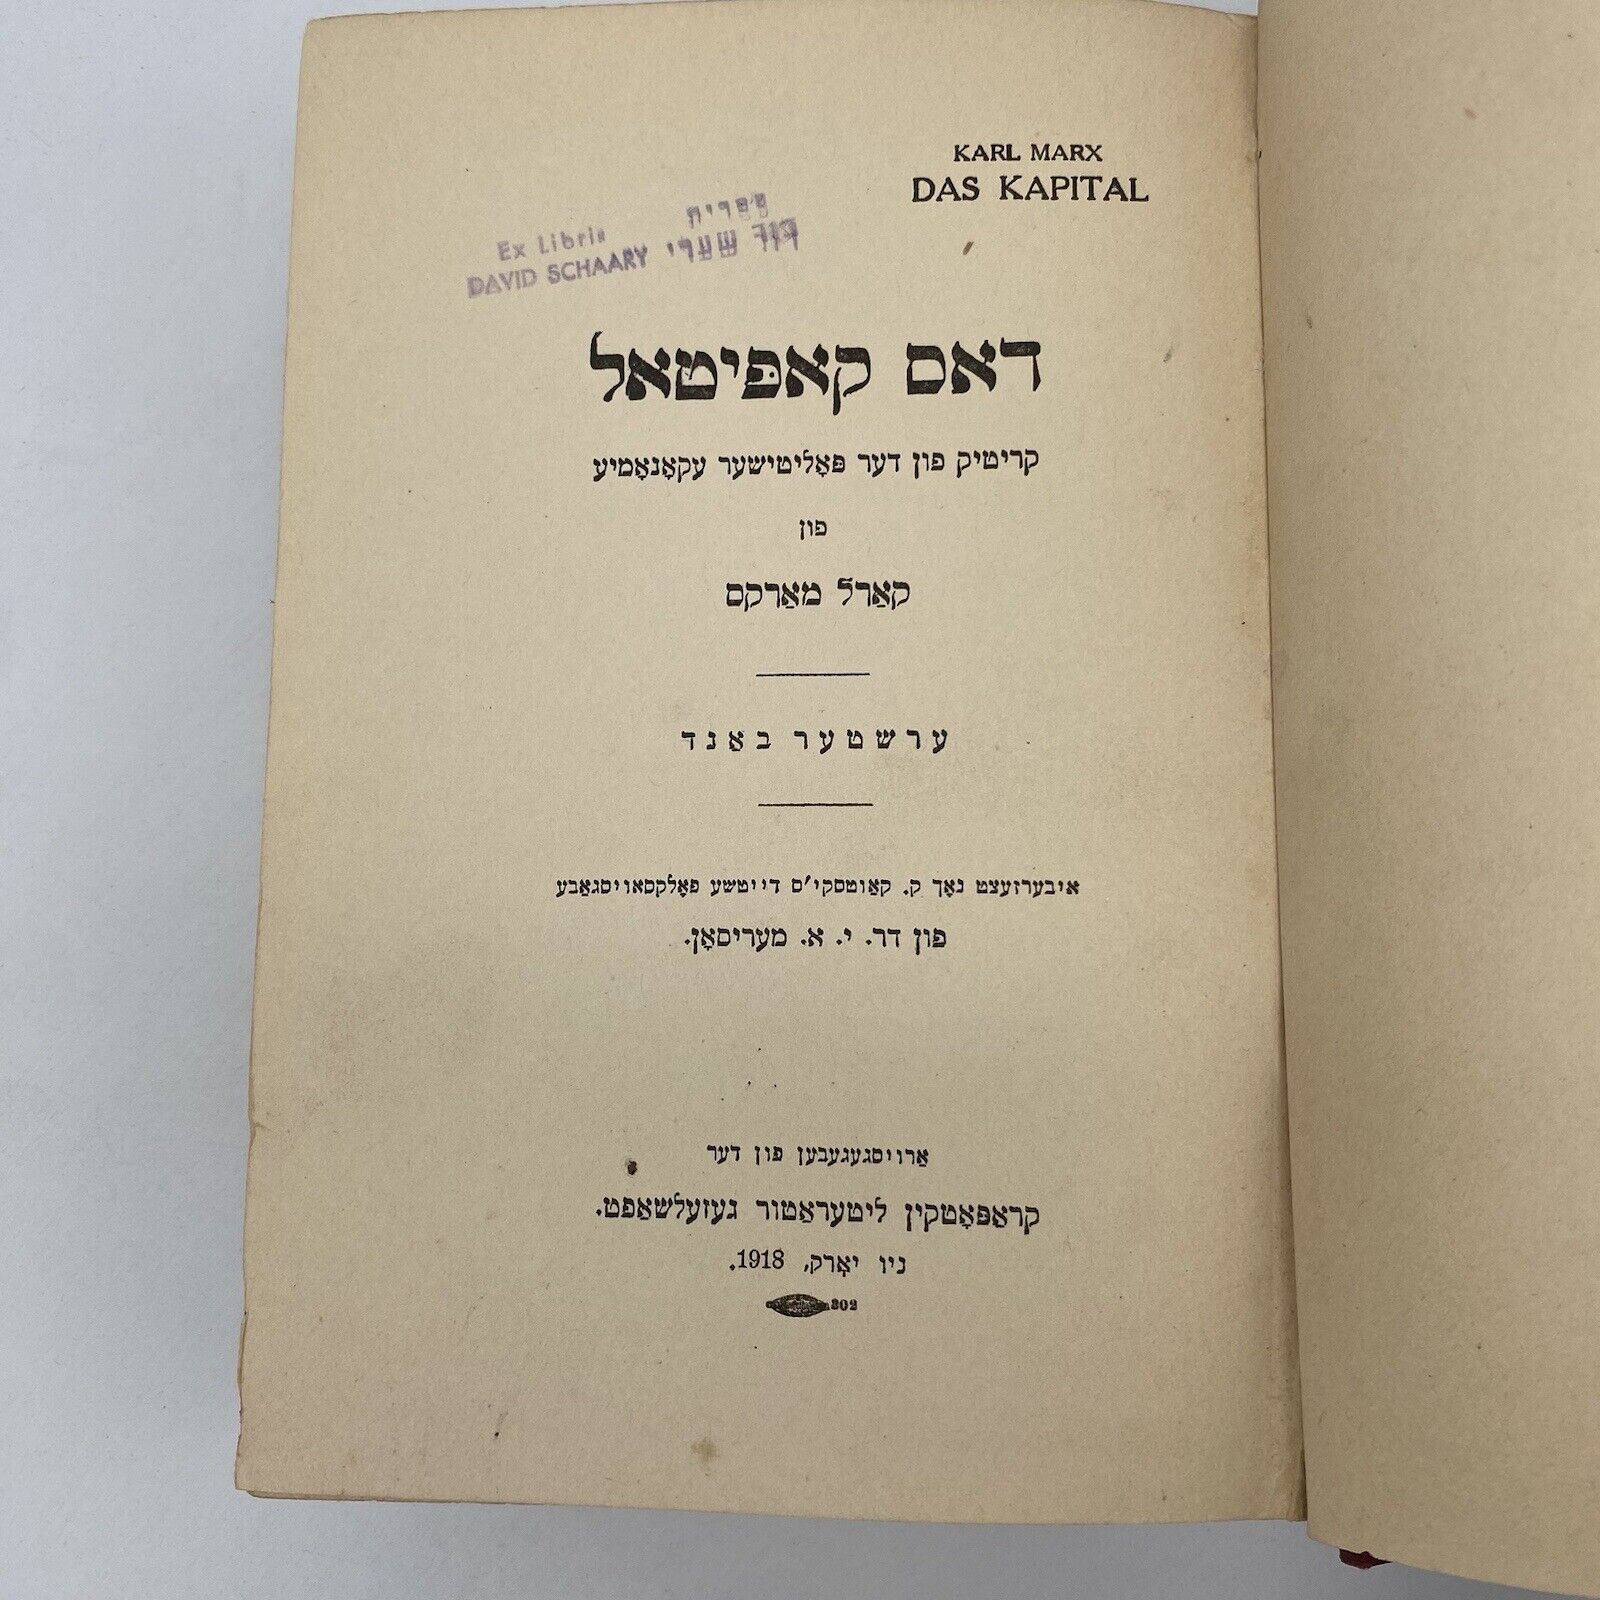 Karl Marx : Das Kapital First YIDDISH Edition, 2nd Vol 1918 Kropotkin - New York